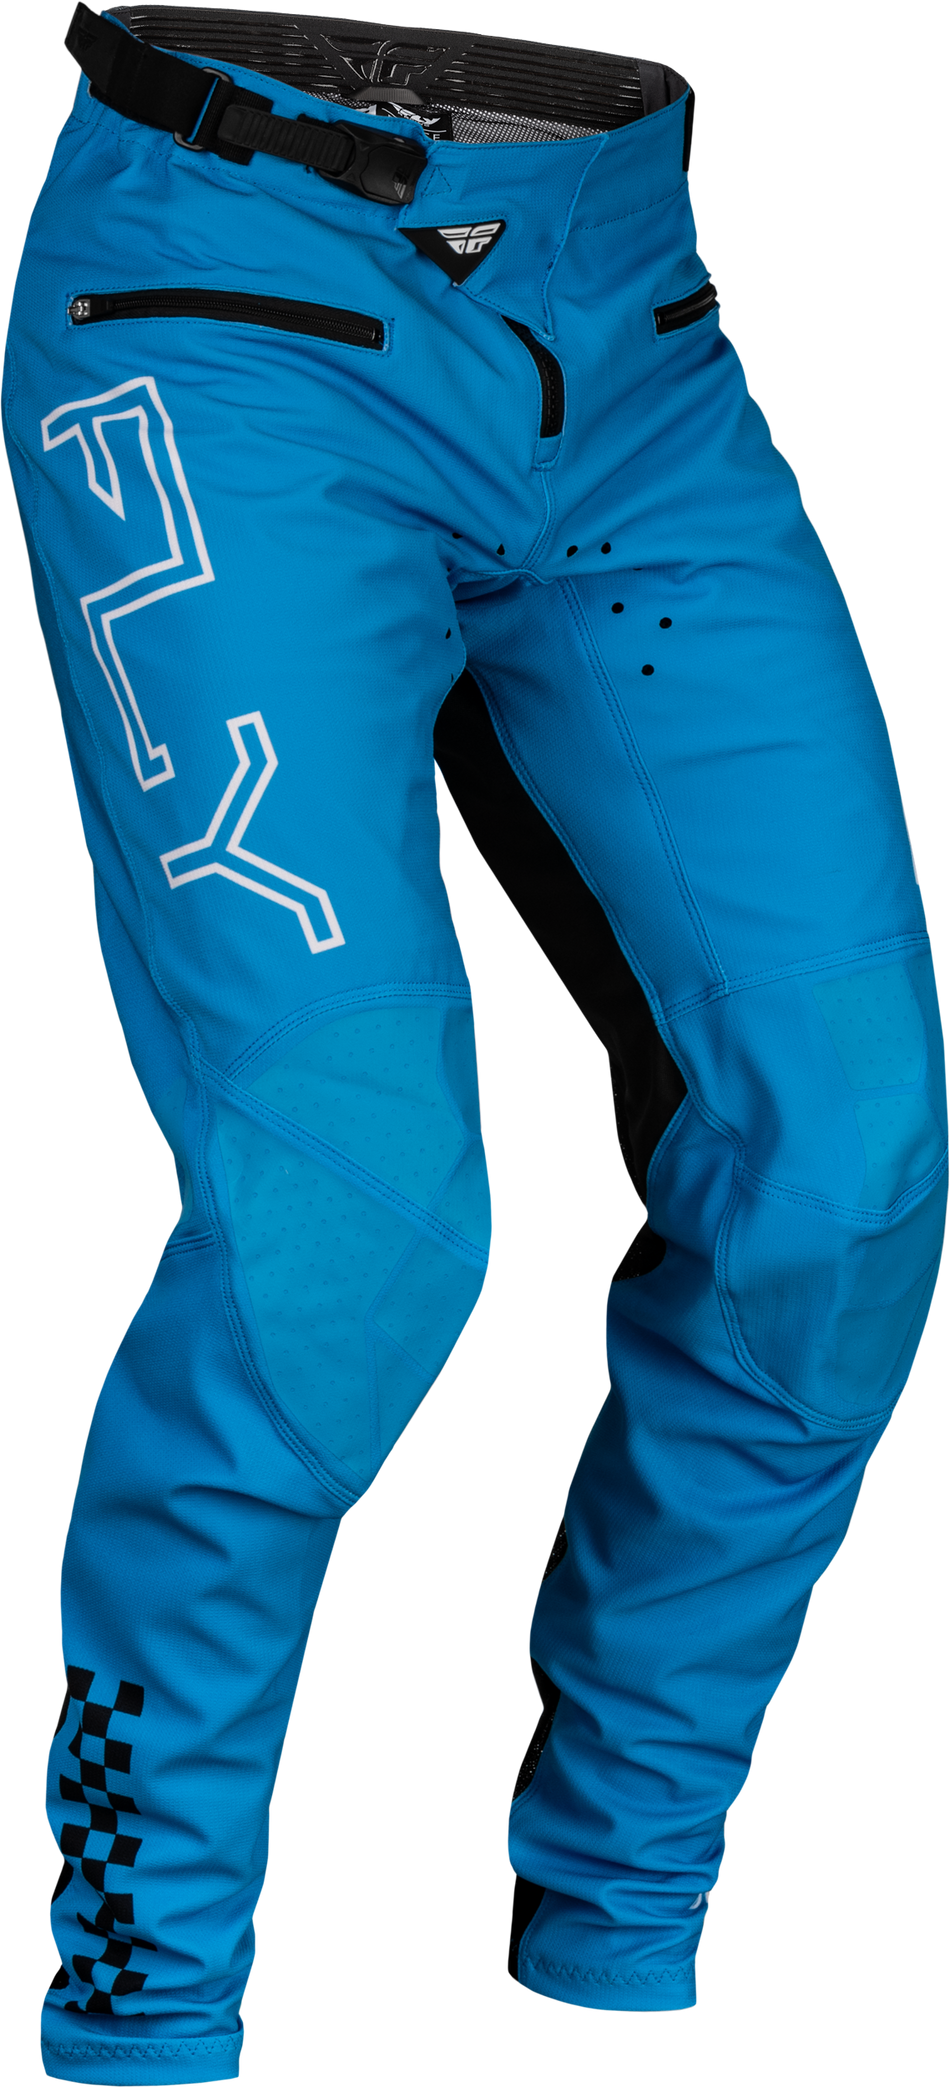 FLY RACING Rayce Bicycle Pants Blue Sz 36 377-06236